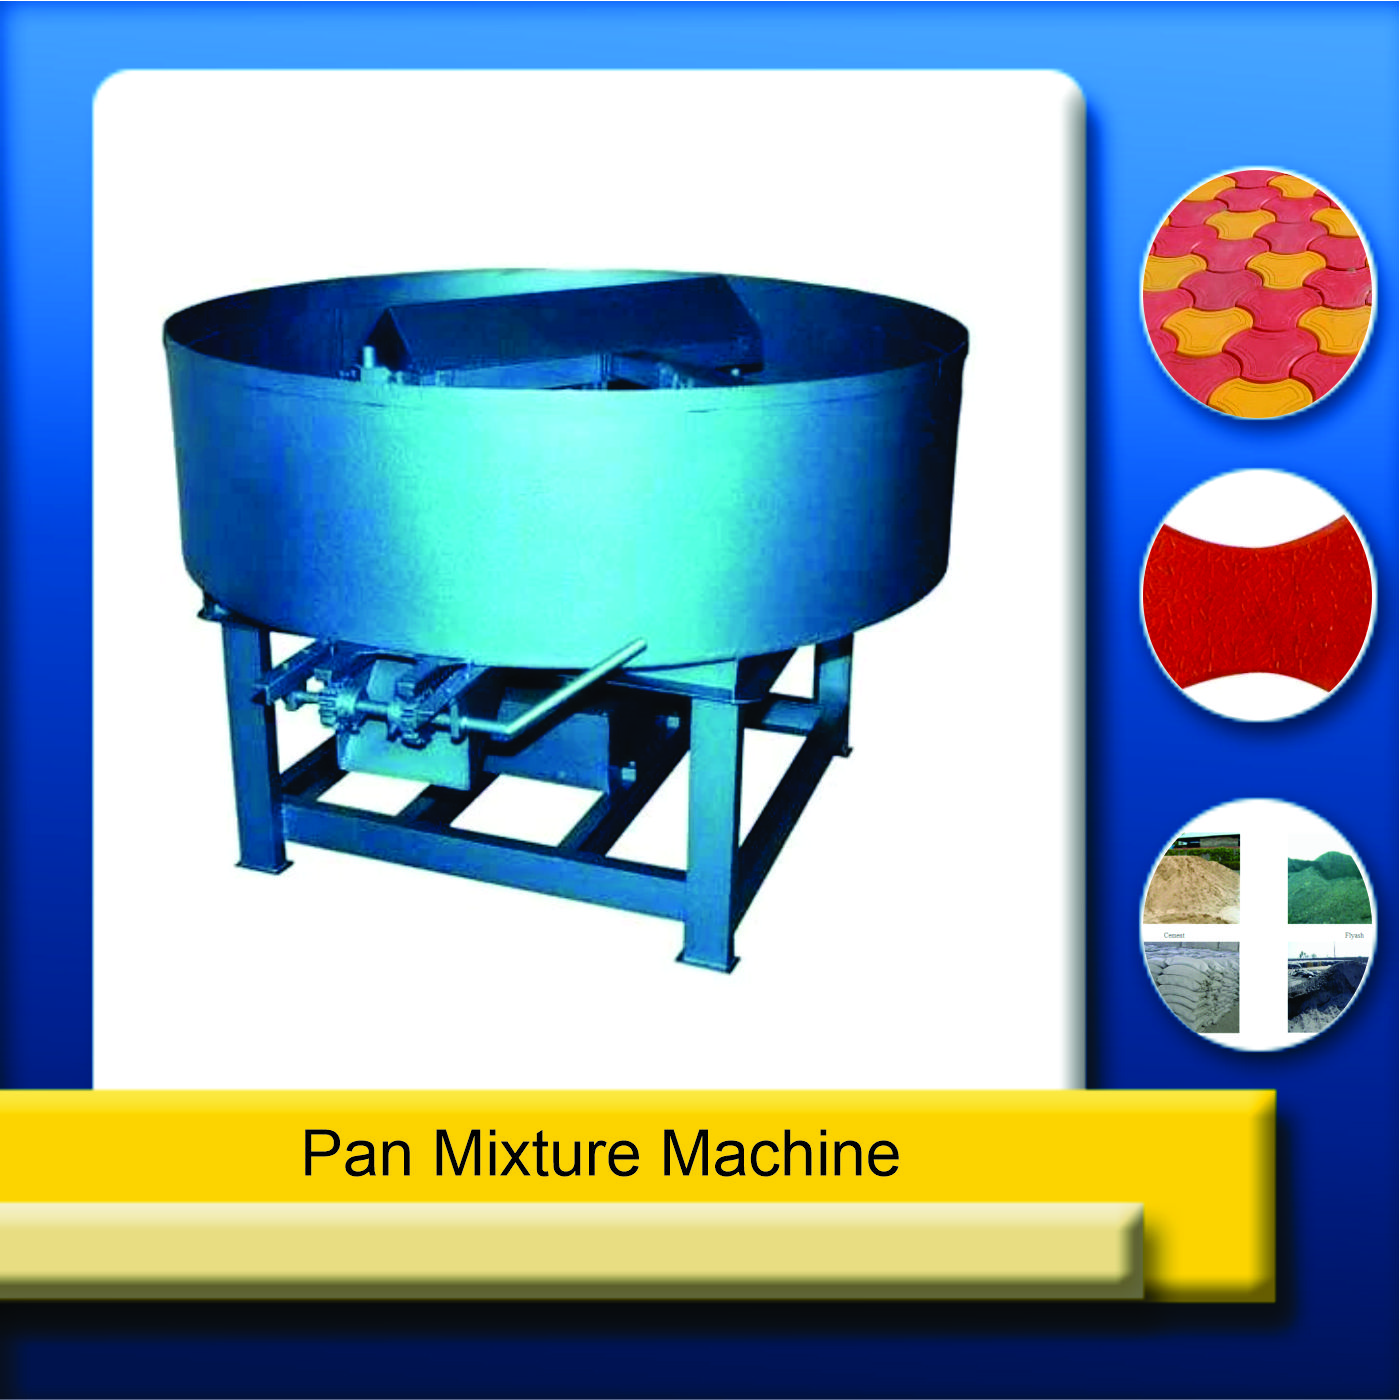 pan mixture machine